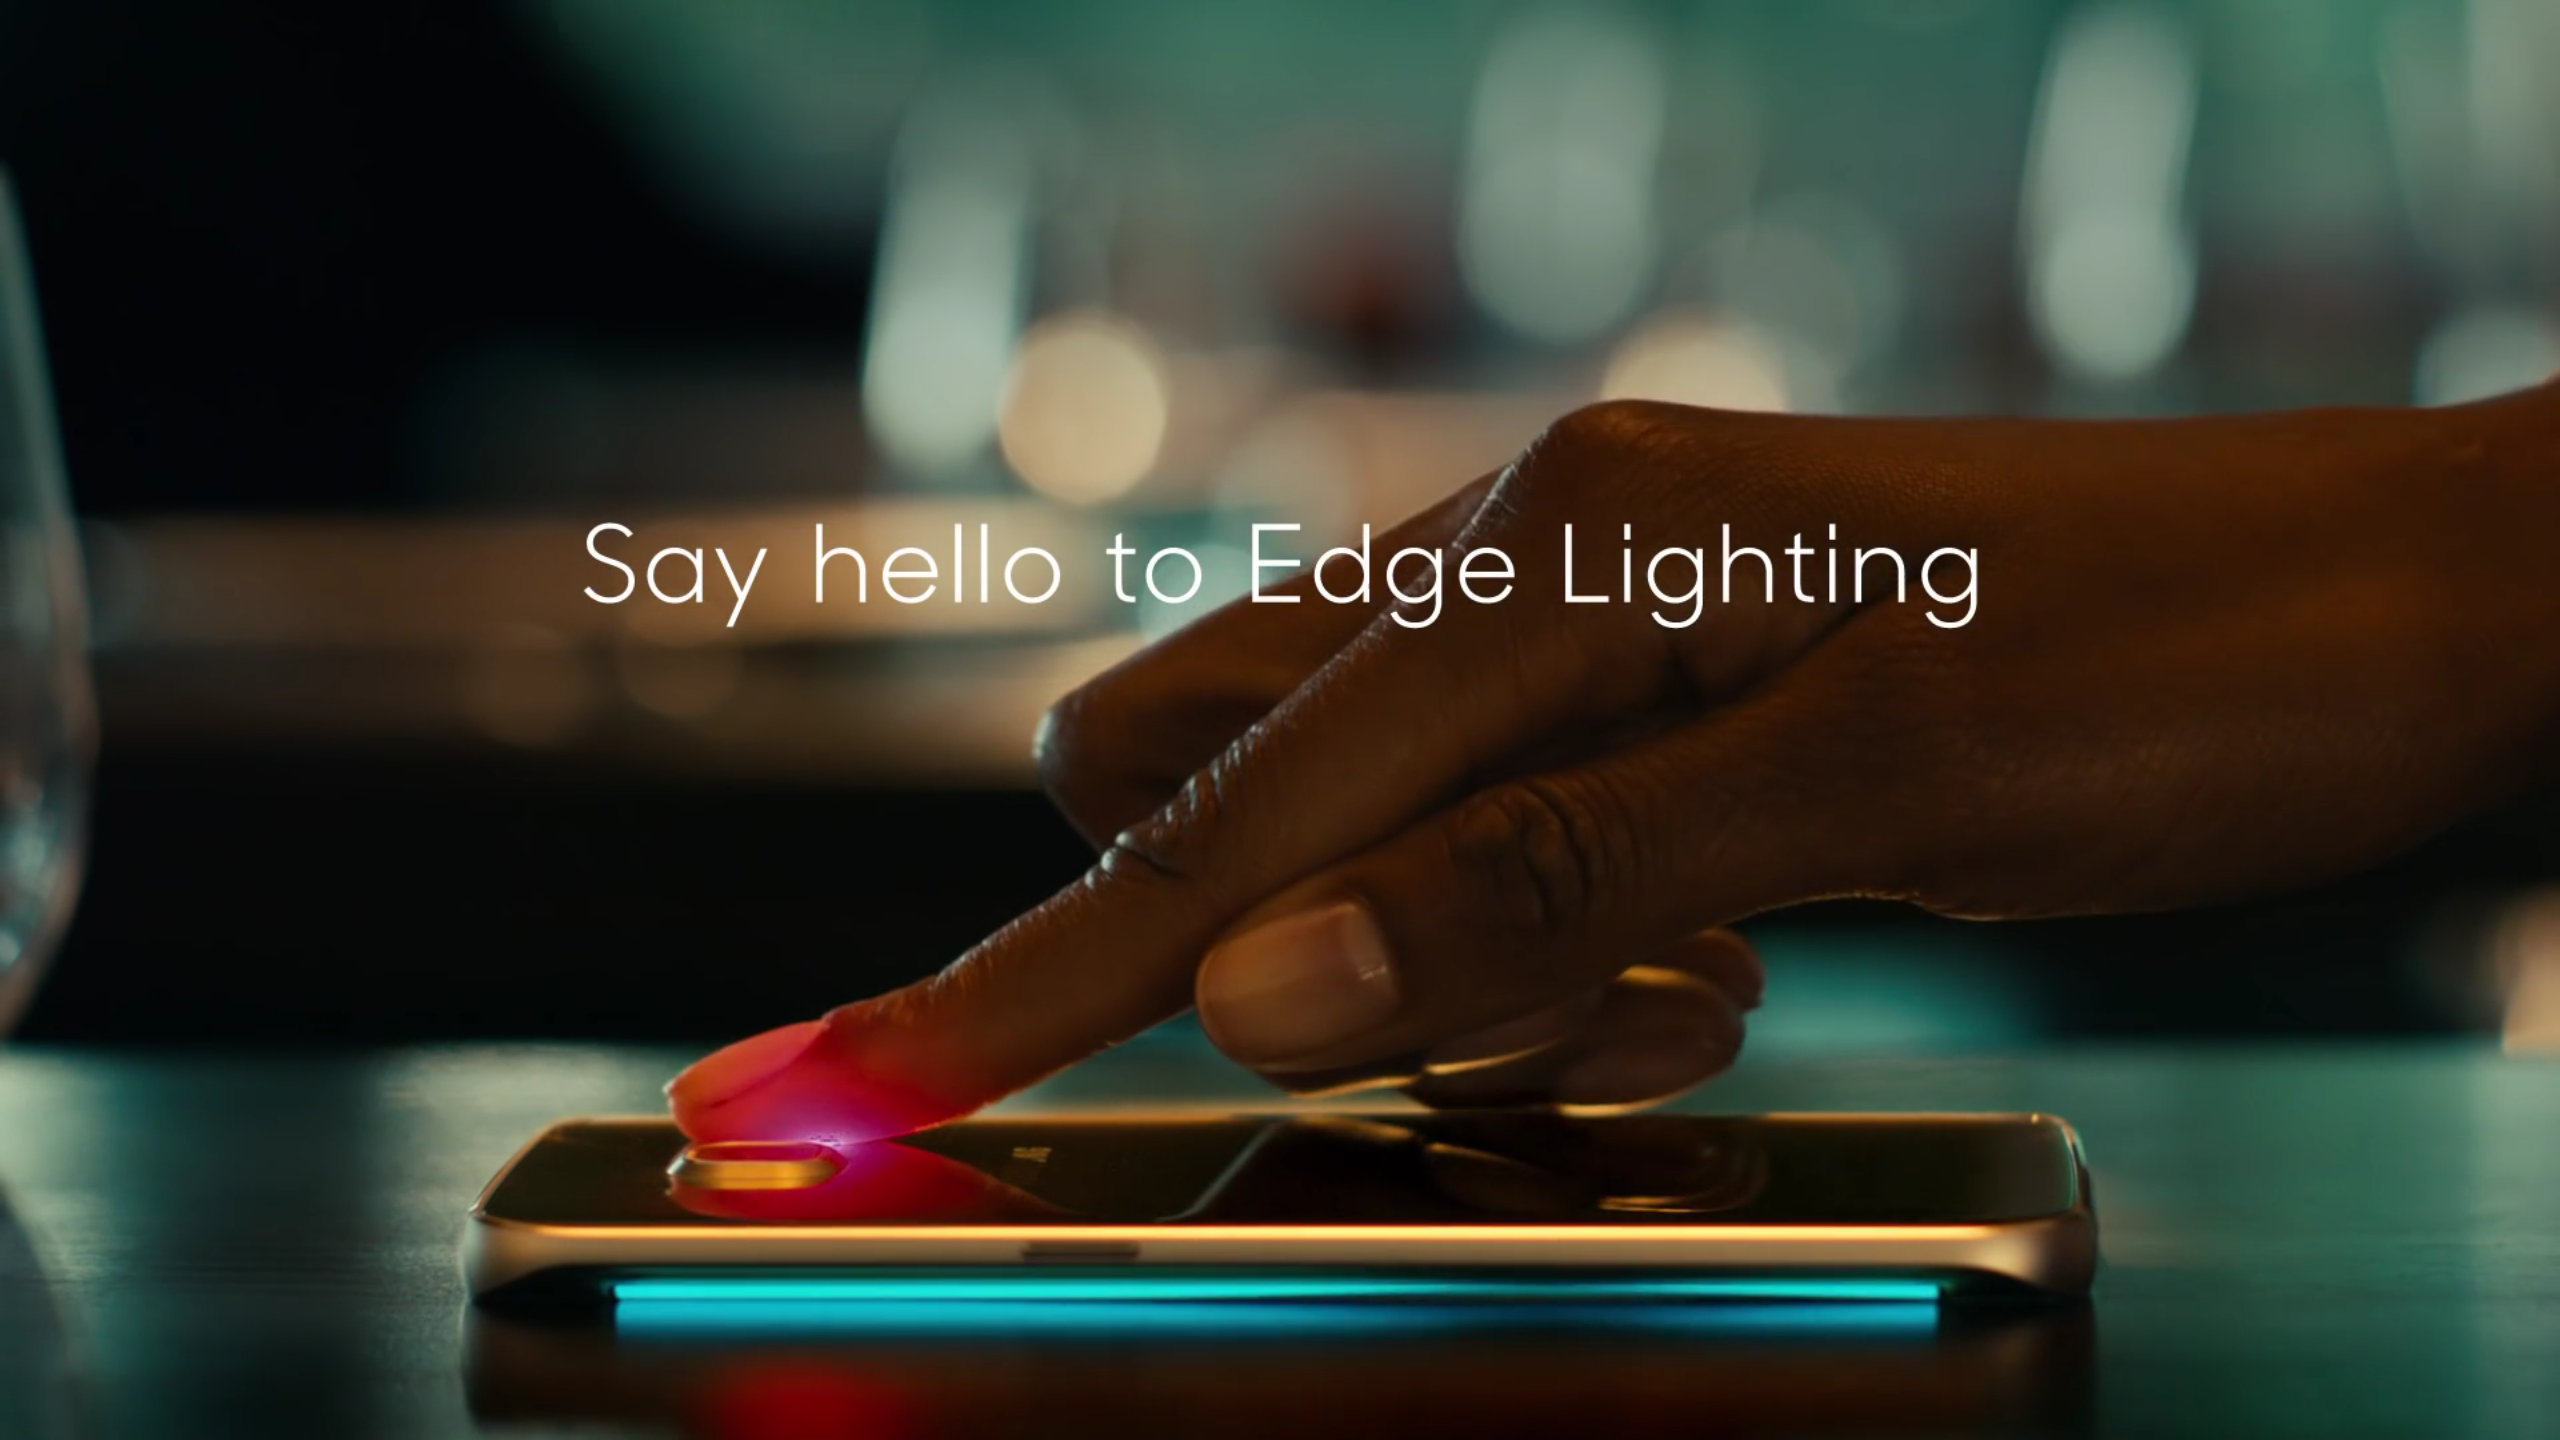 Quietly Brilliant: Galaxy S6 edge's Edge Lighting promo silences its rivals - SamMobile -